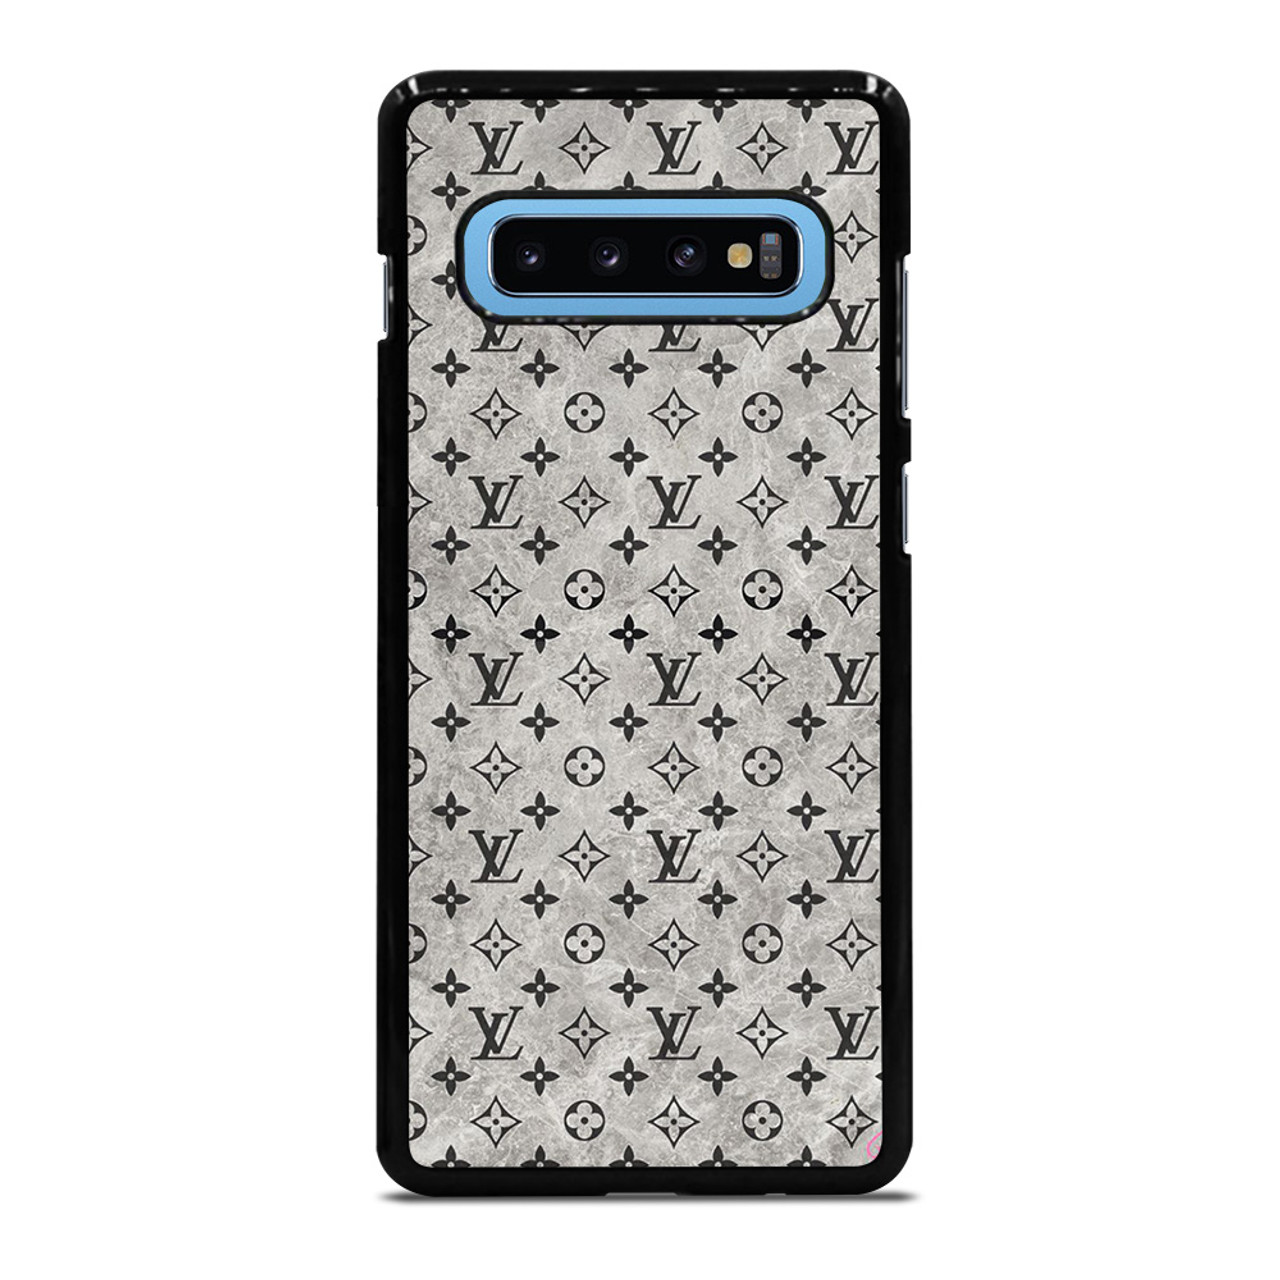 LOUIS VUITTON PATTERN GRAY Samsung Galaxy S10 Plus Case Cover